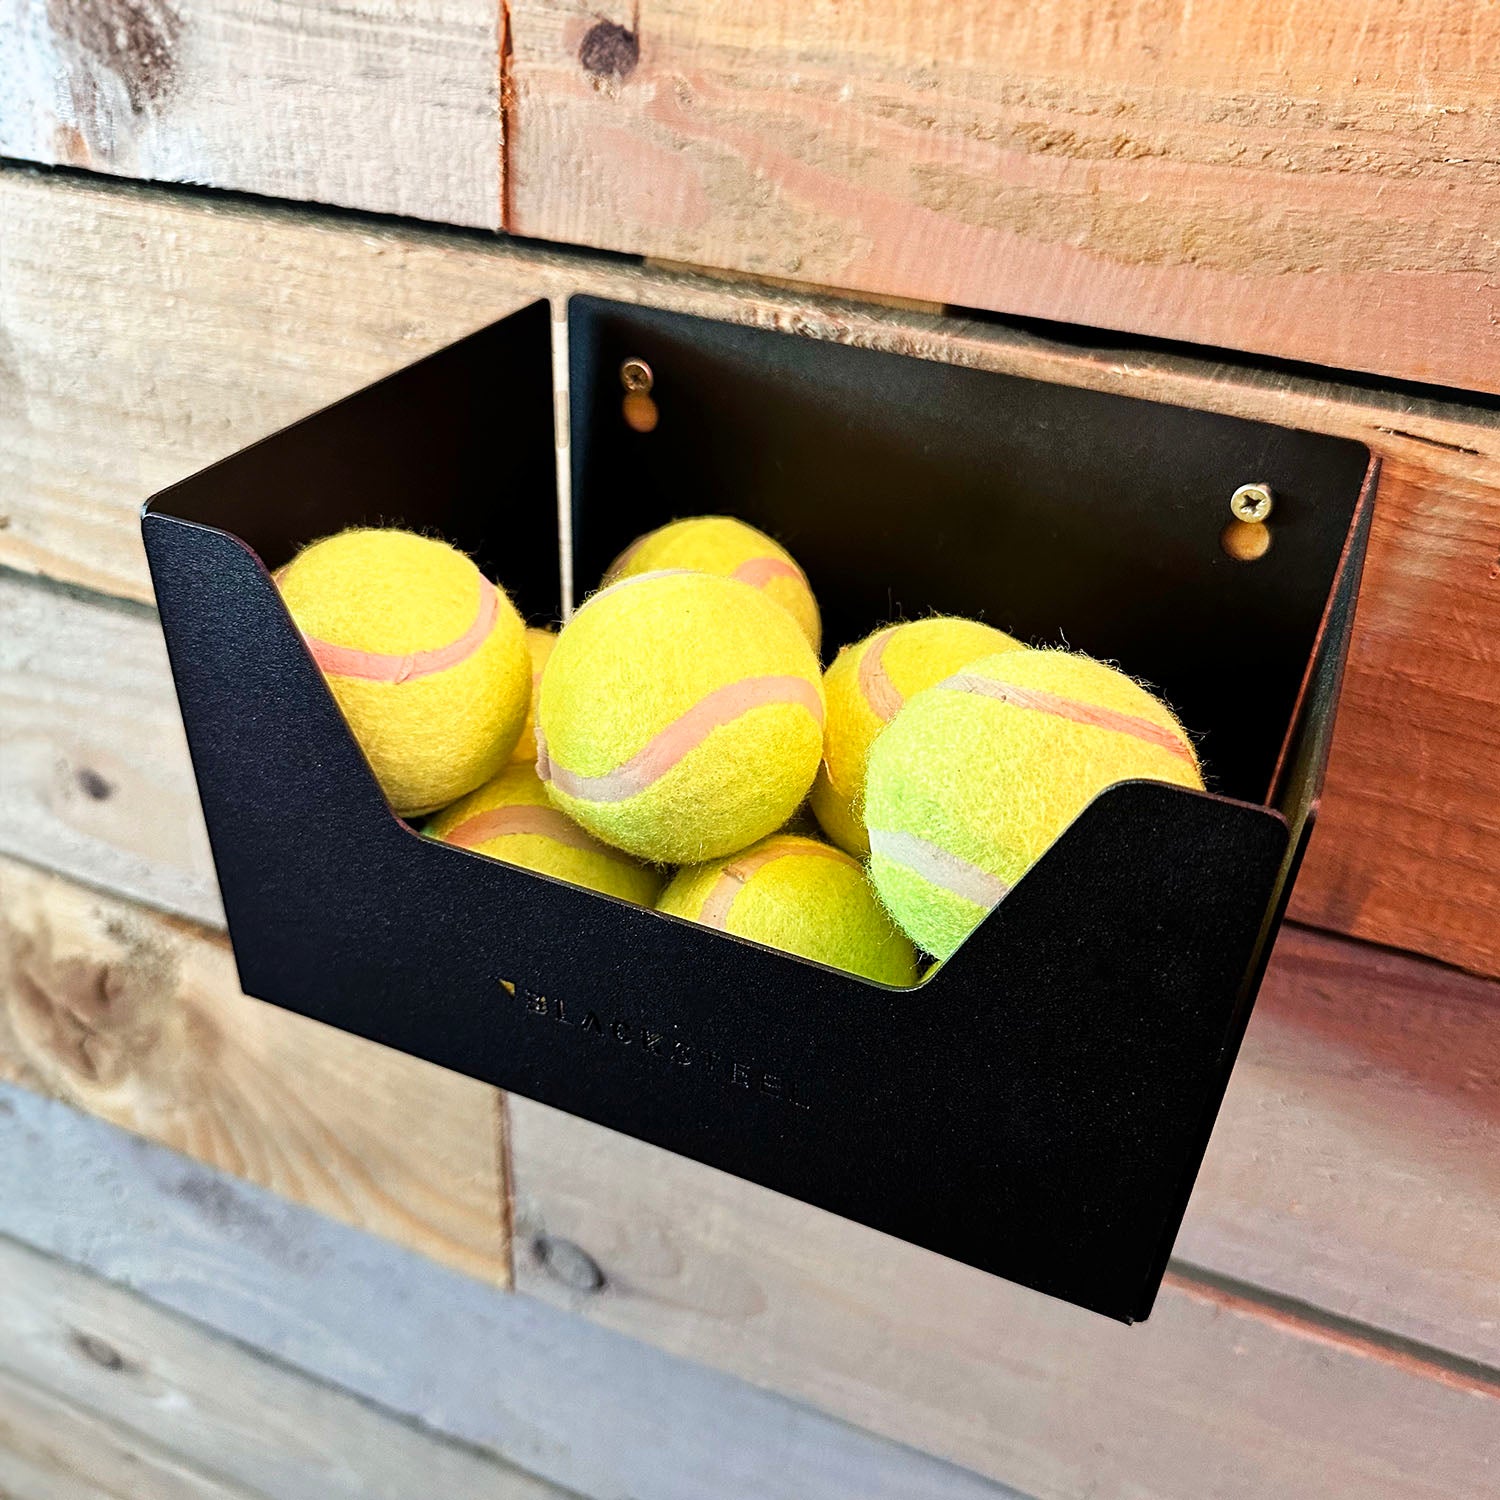 BlackSteel™ Wall Mount Tennis Ball Hopper & Holder - Indoor Outdoors